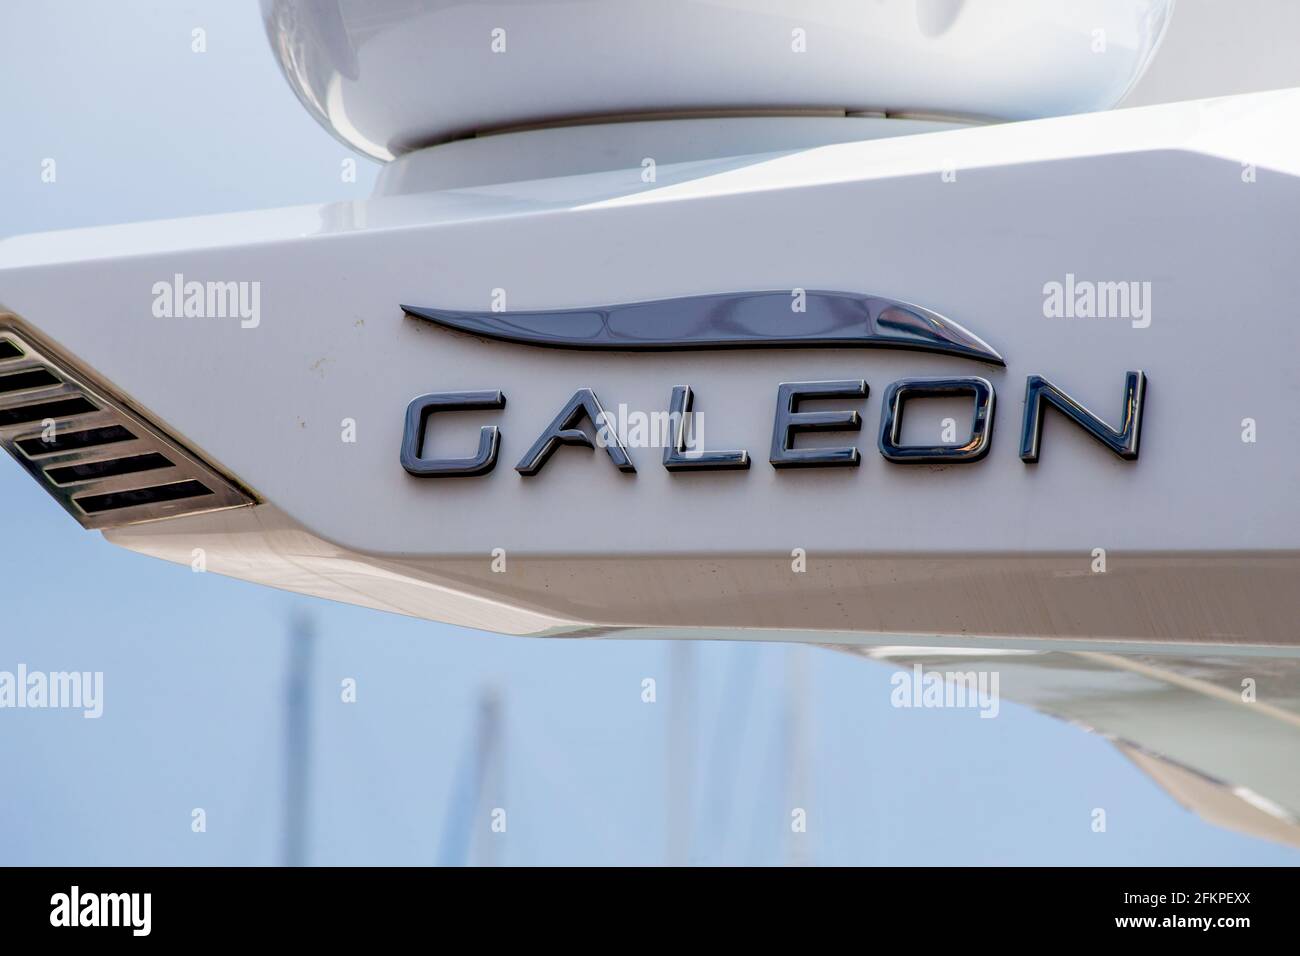 Galeon motor yacht logo Stock Photo